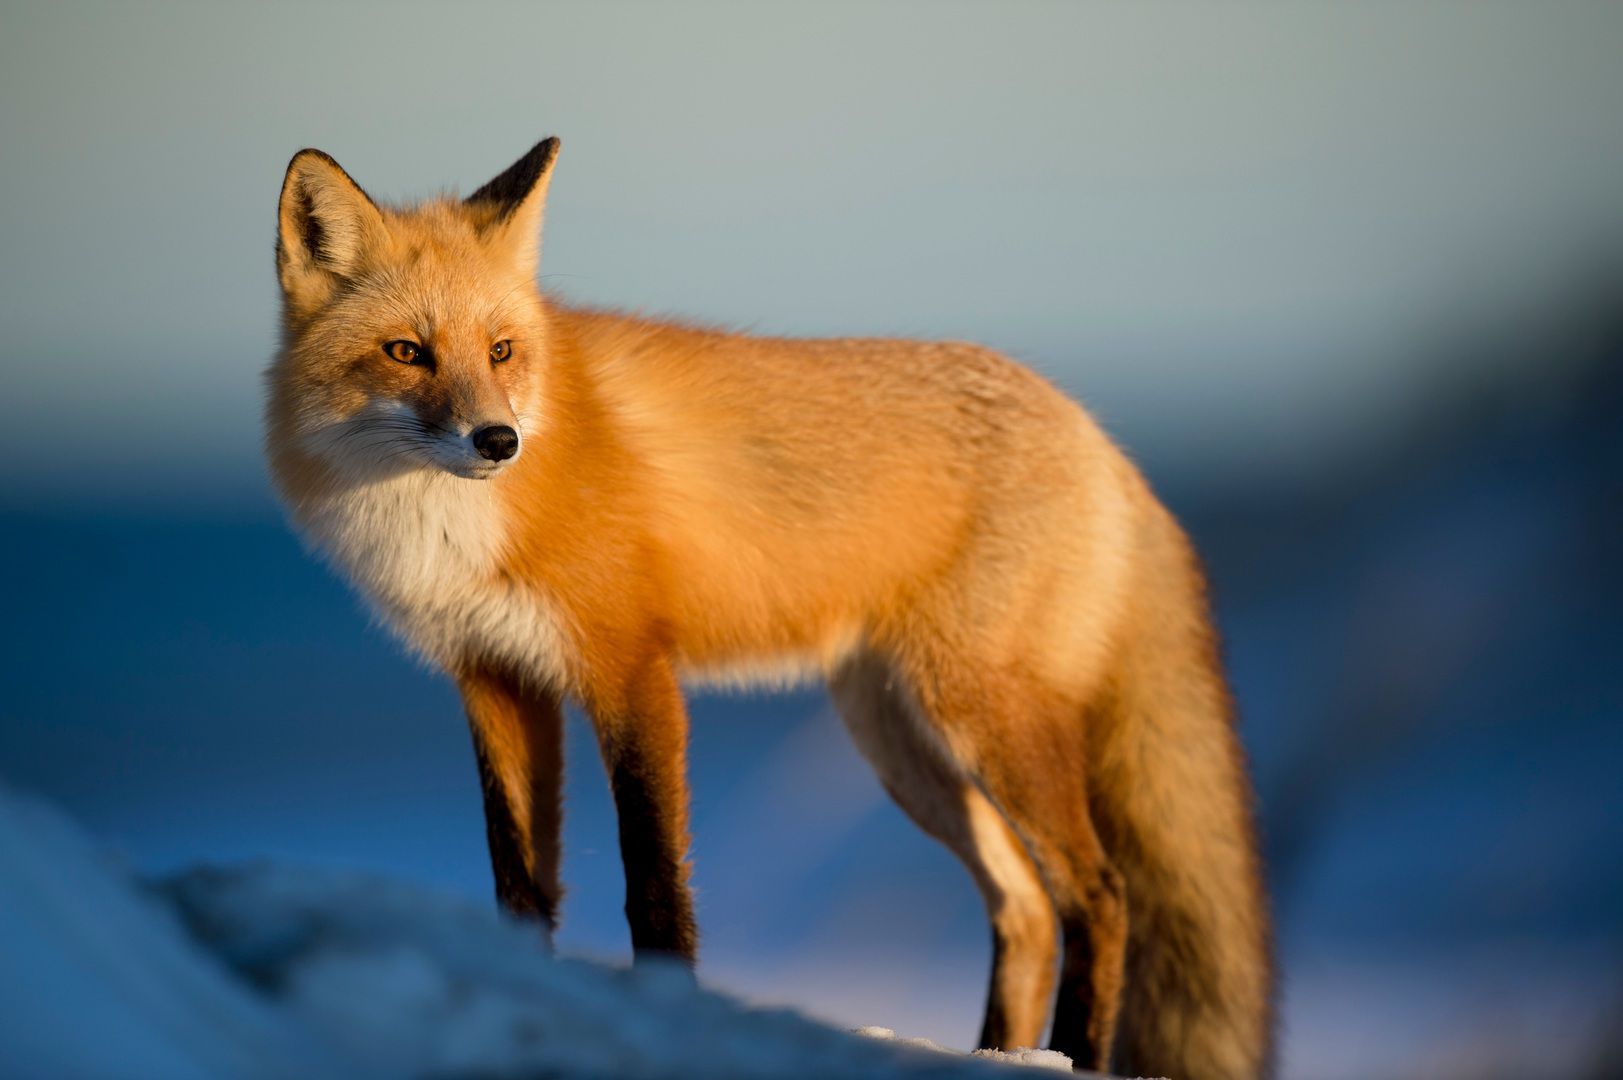 Red fox standing in sunlight